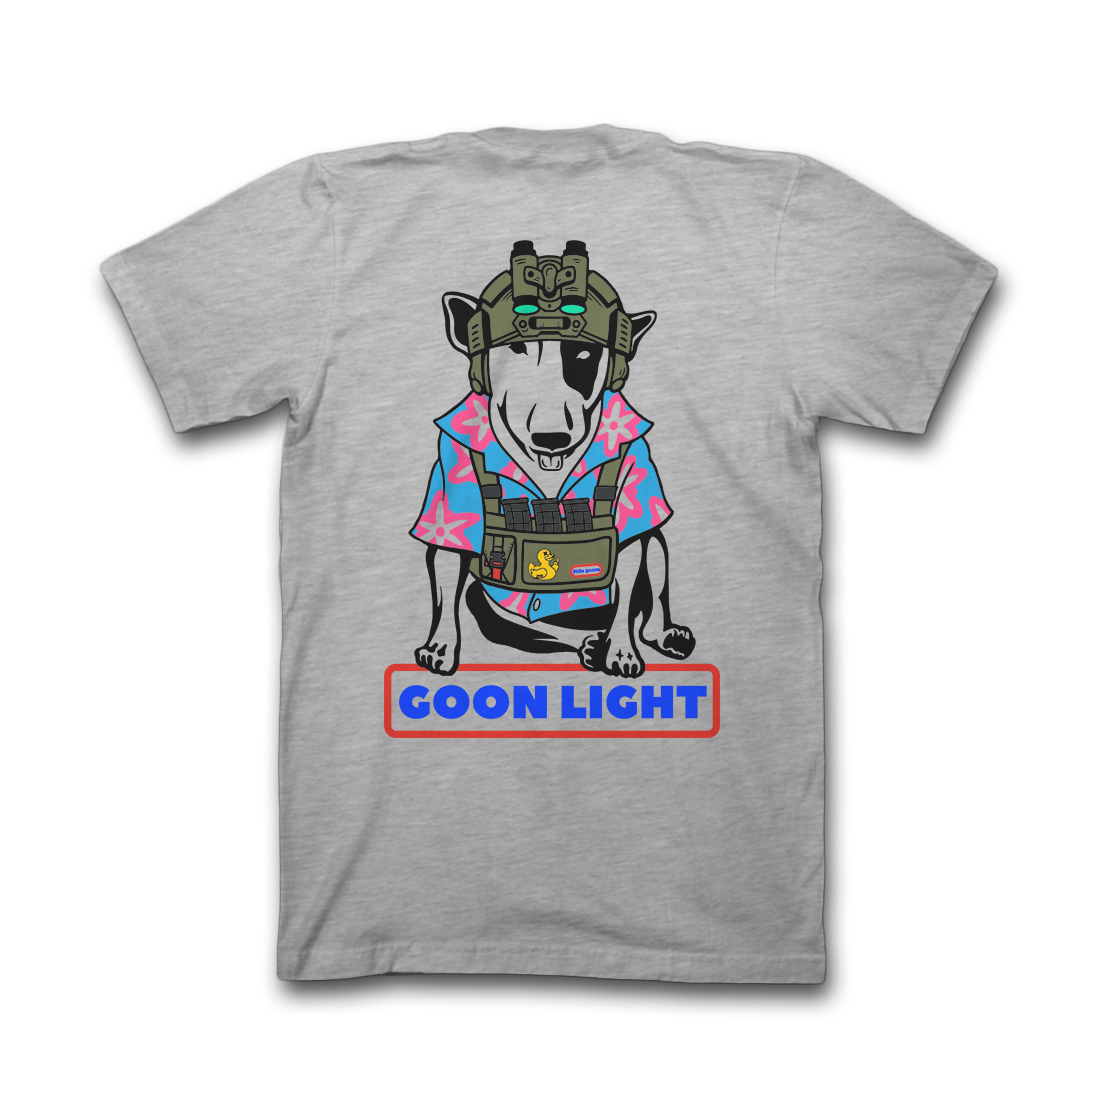 Dangerous Goods® Goon Light “Party Animal” T-Shirt : GREY